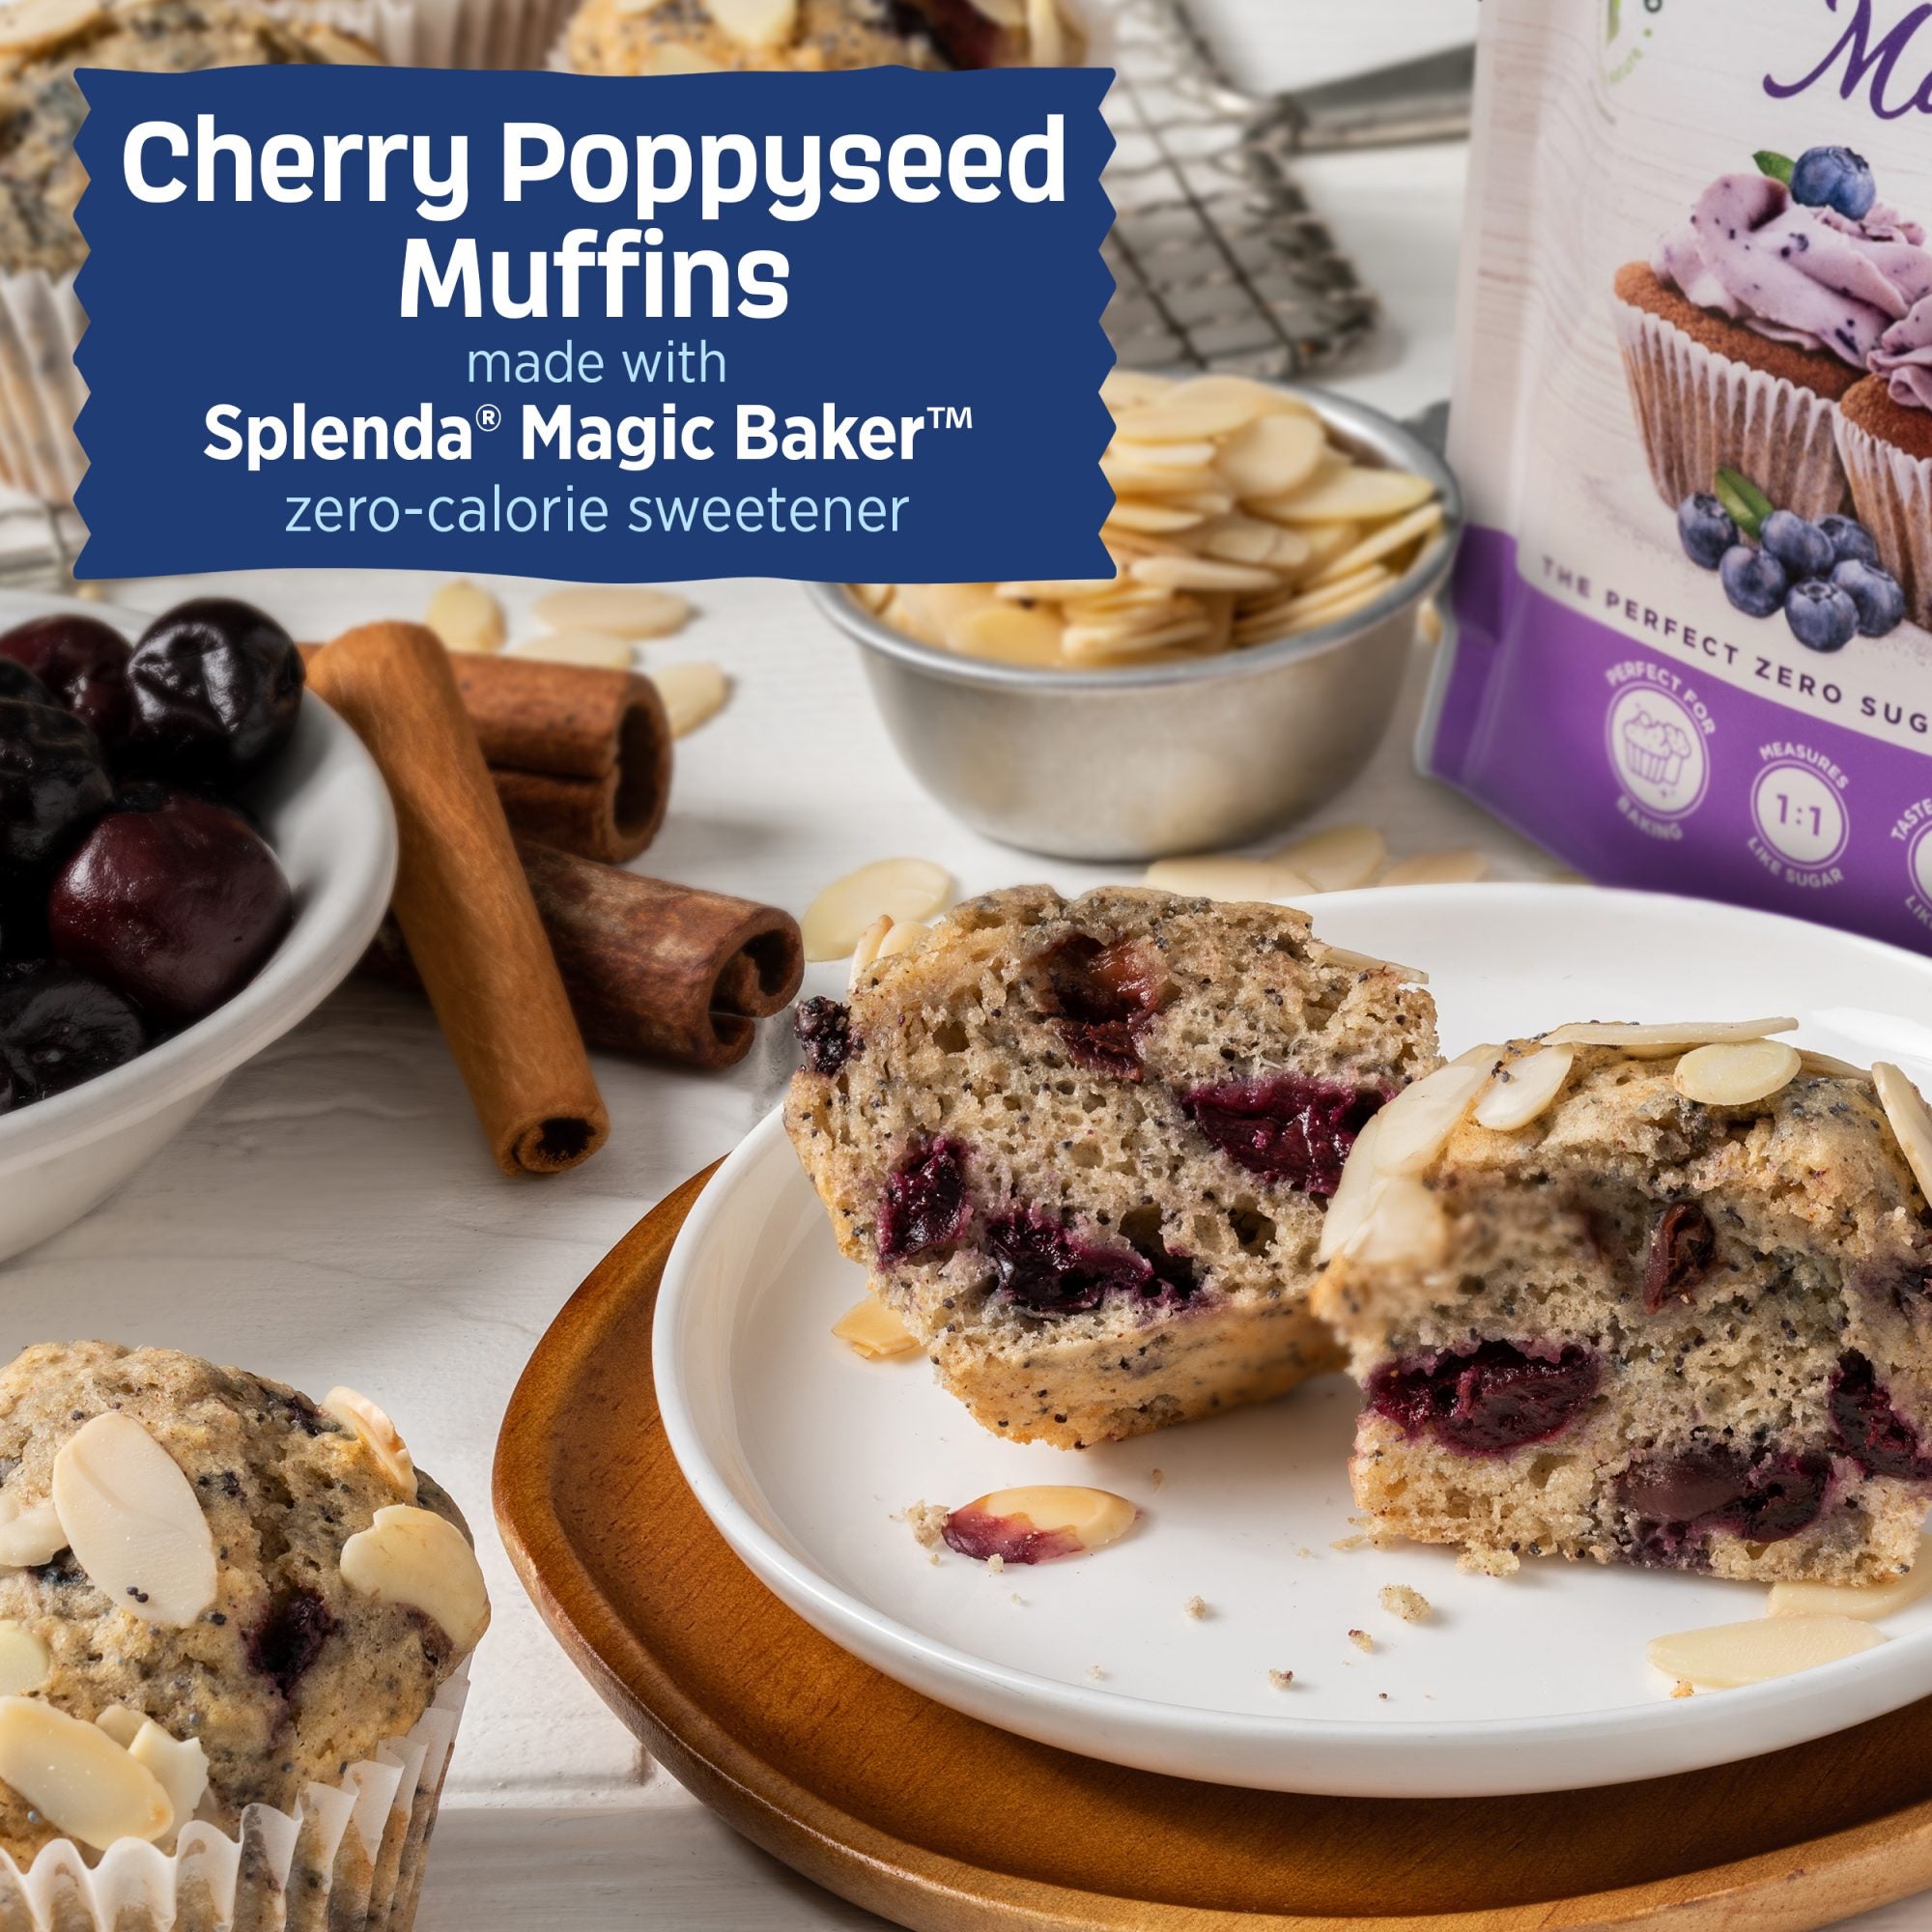 Splenda Magic Baker Sweetener 16oz Pouch - Cherry Poppyseed Muffins Recipe